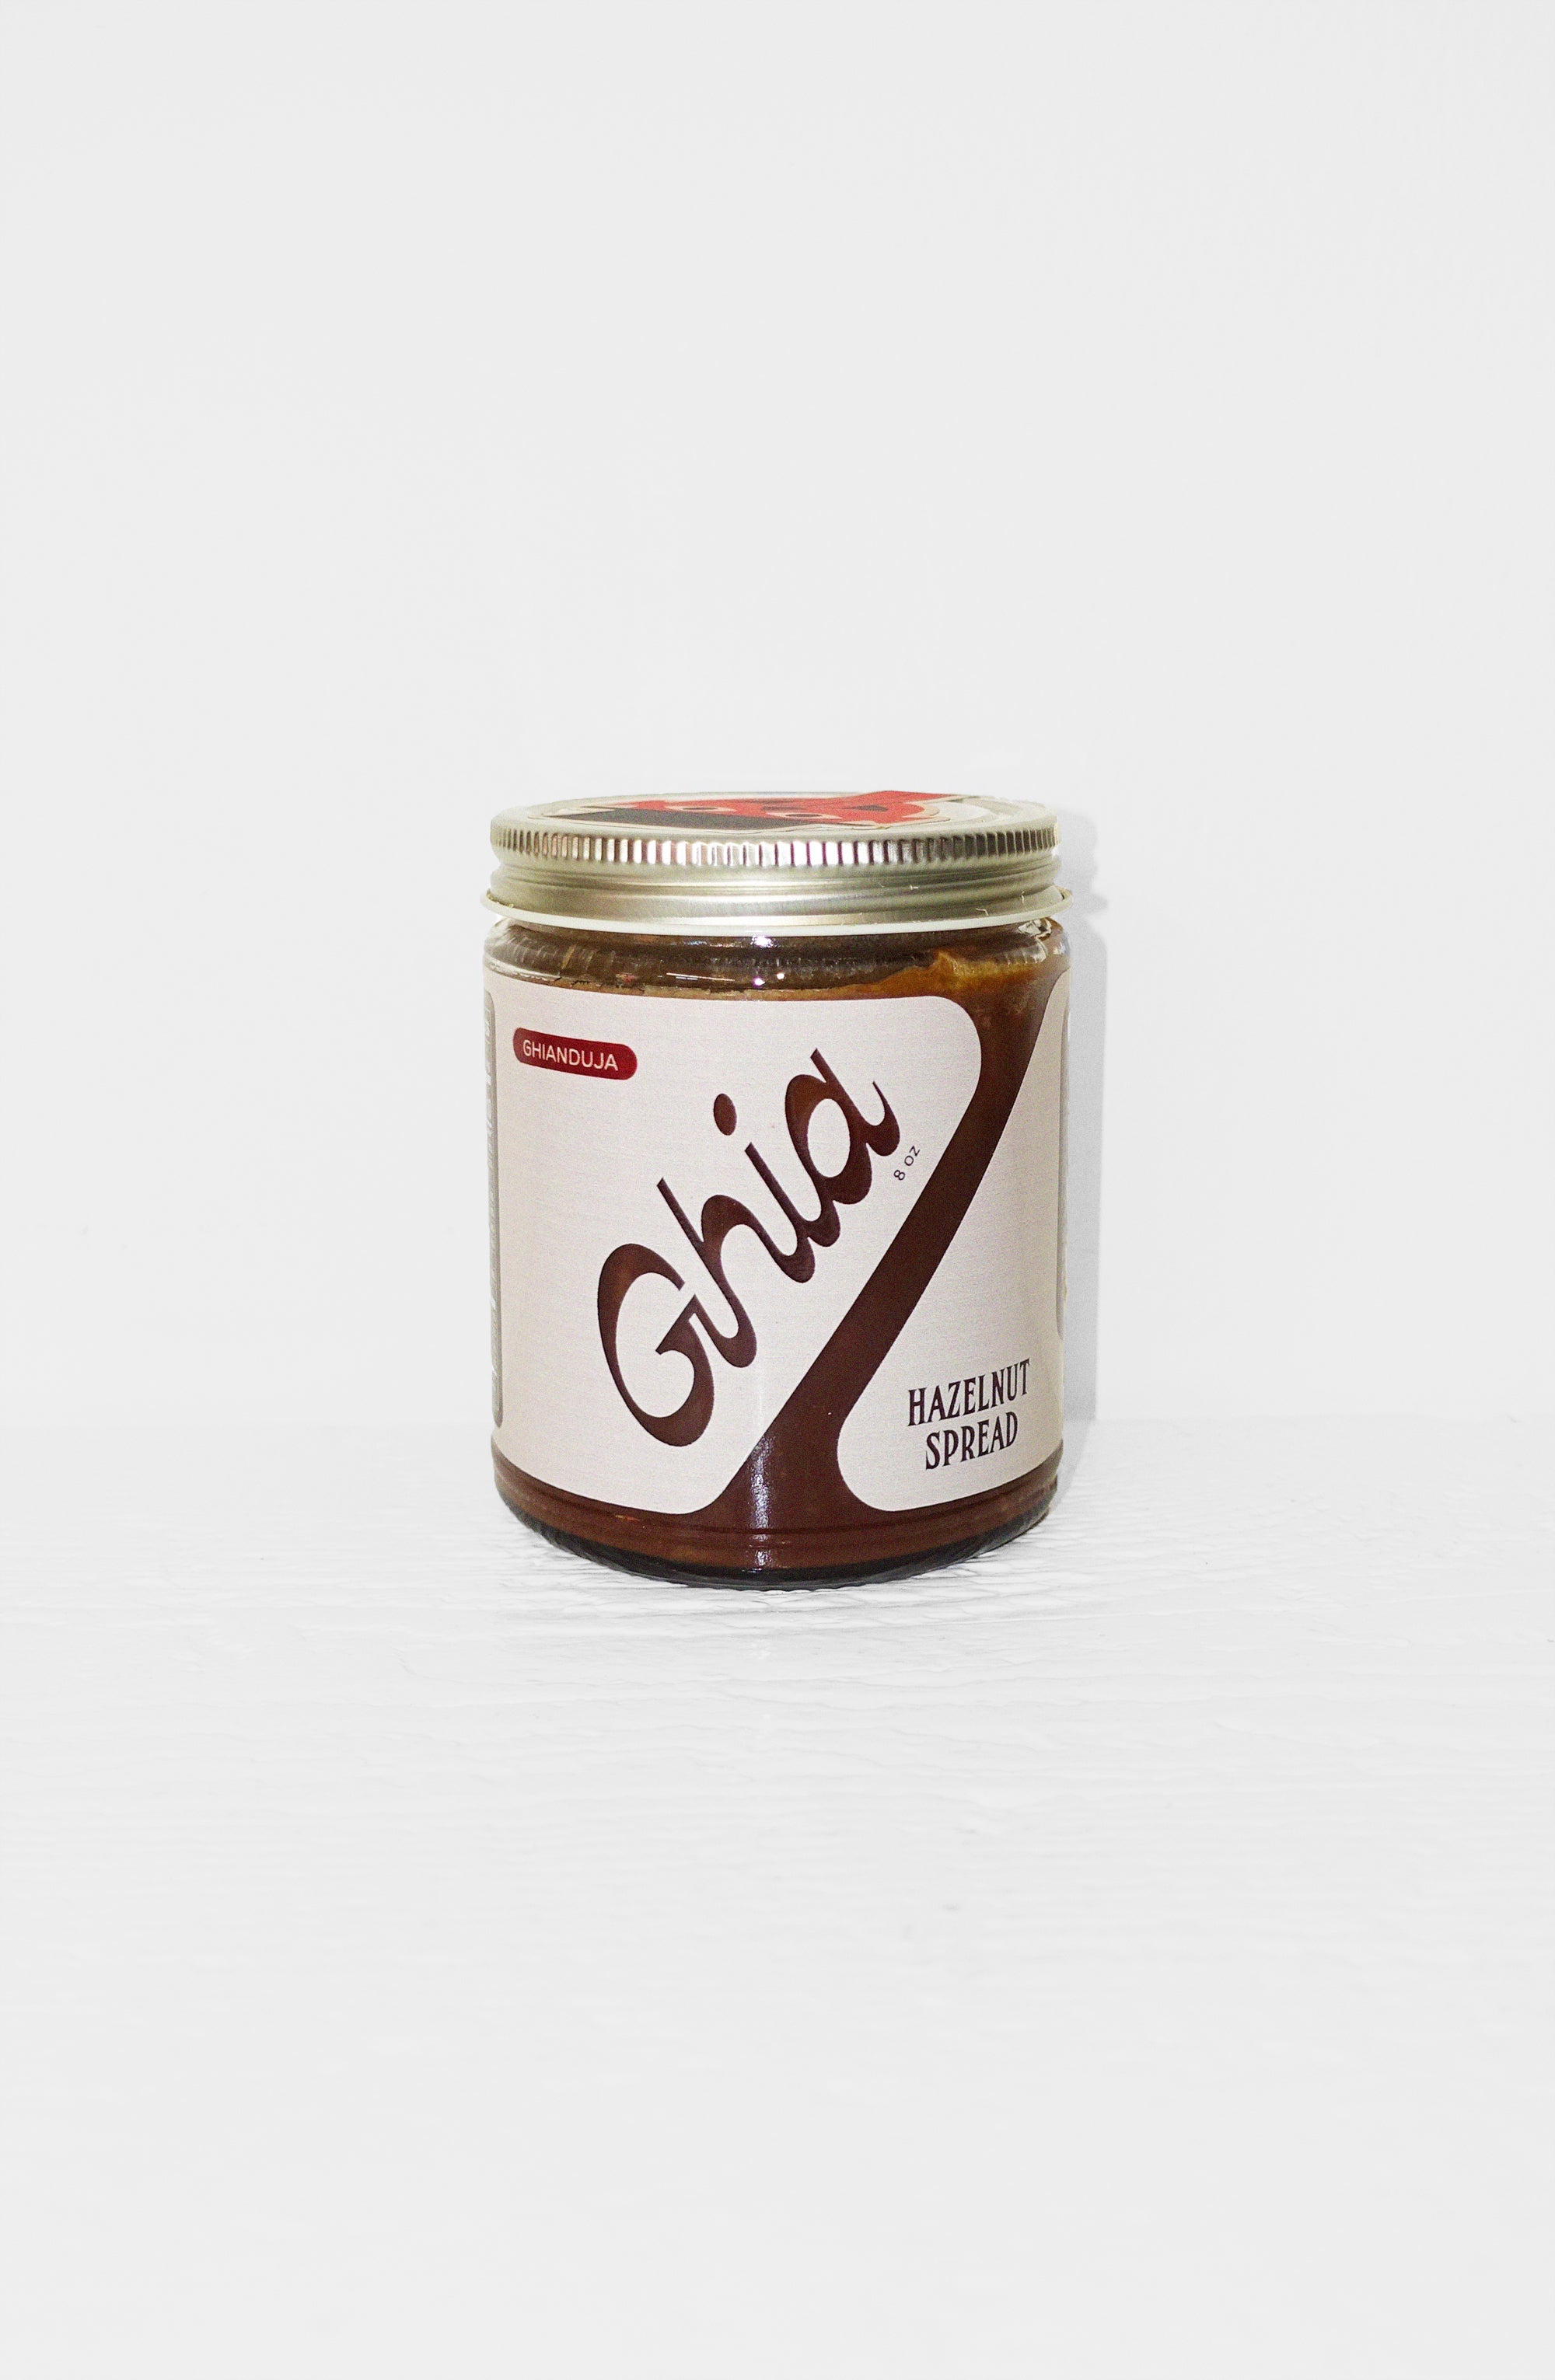 Ghianduja: Chocolate Hazelnut Spread by Ghia